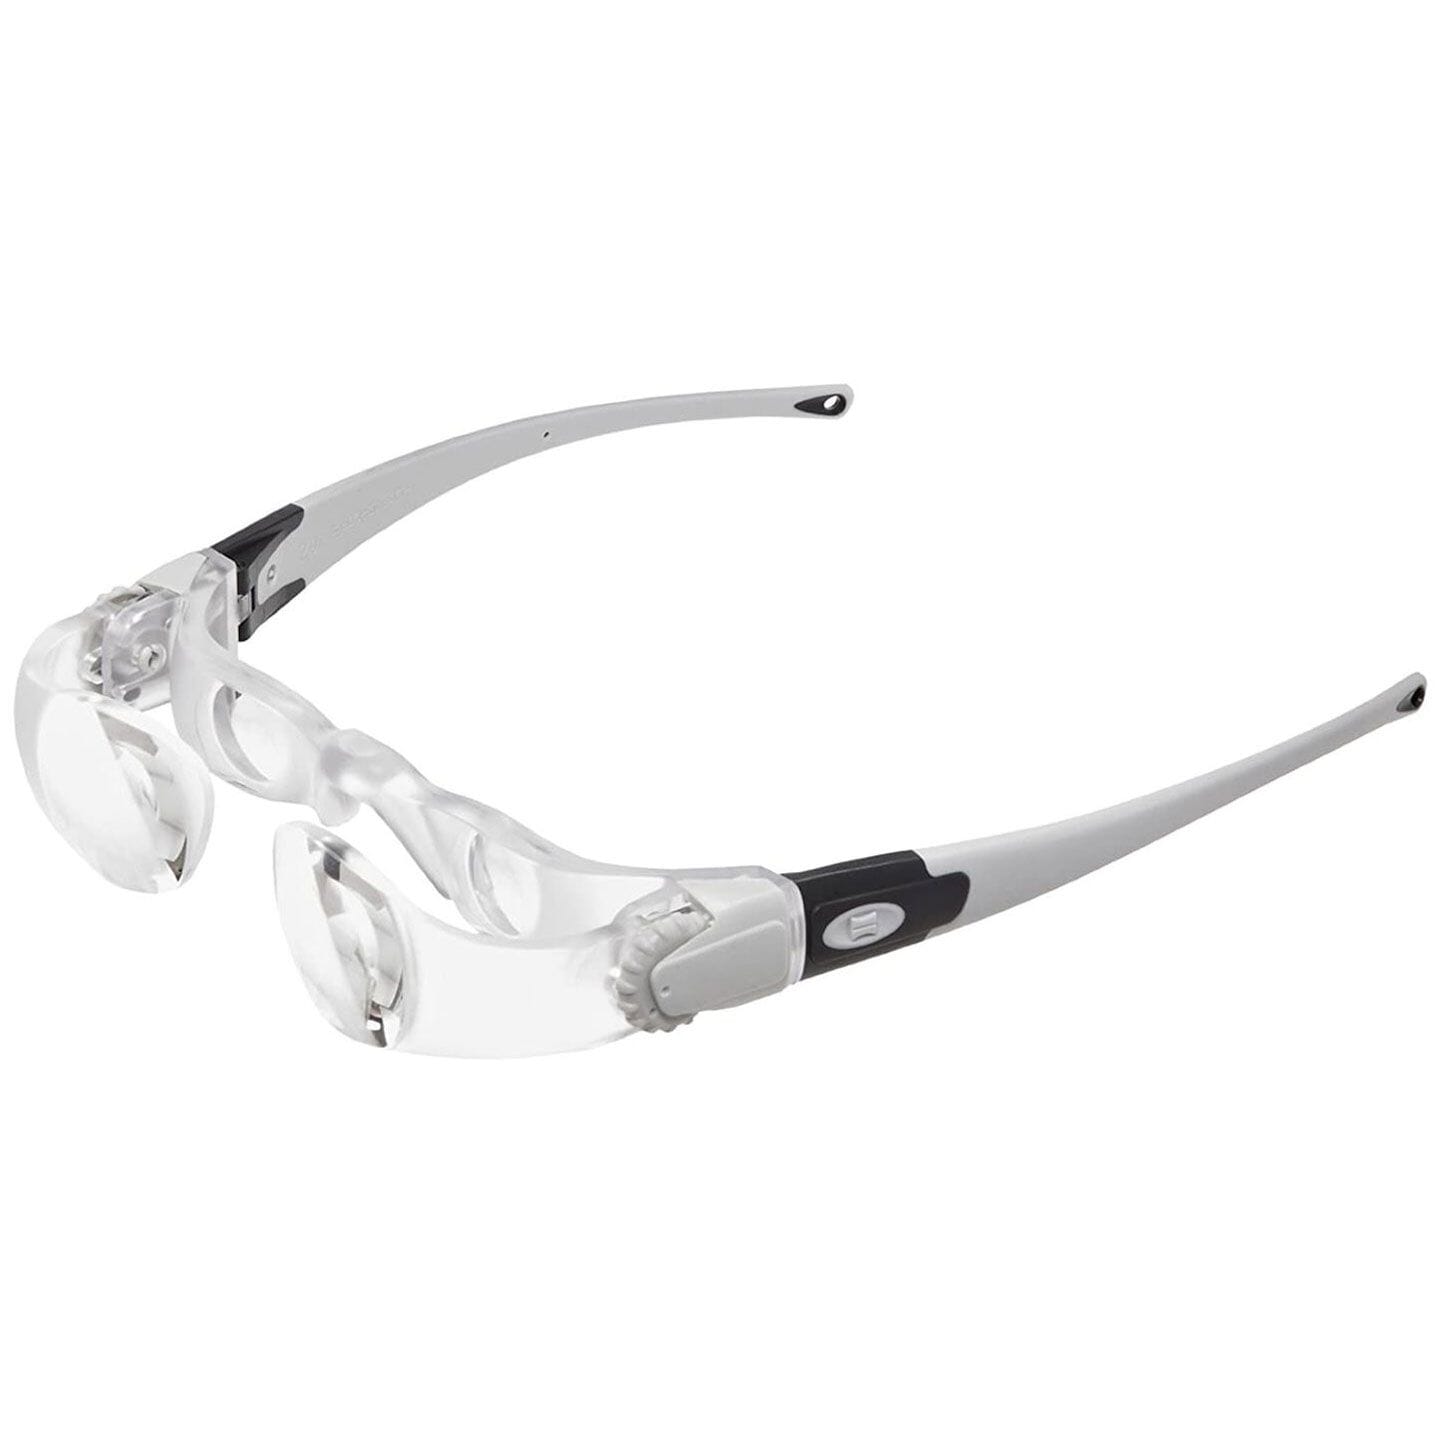 Magnifying Glasses MaxDetail 2 x -Eschenbach 1624-51 (for near)